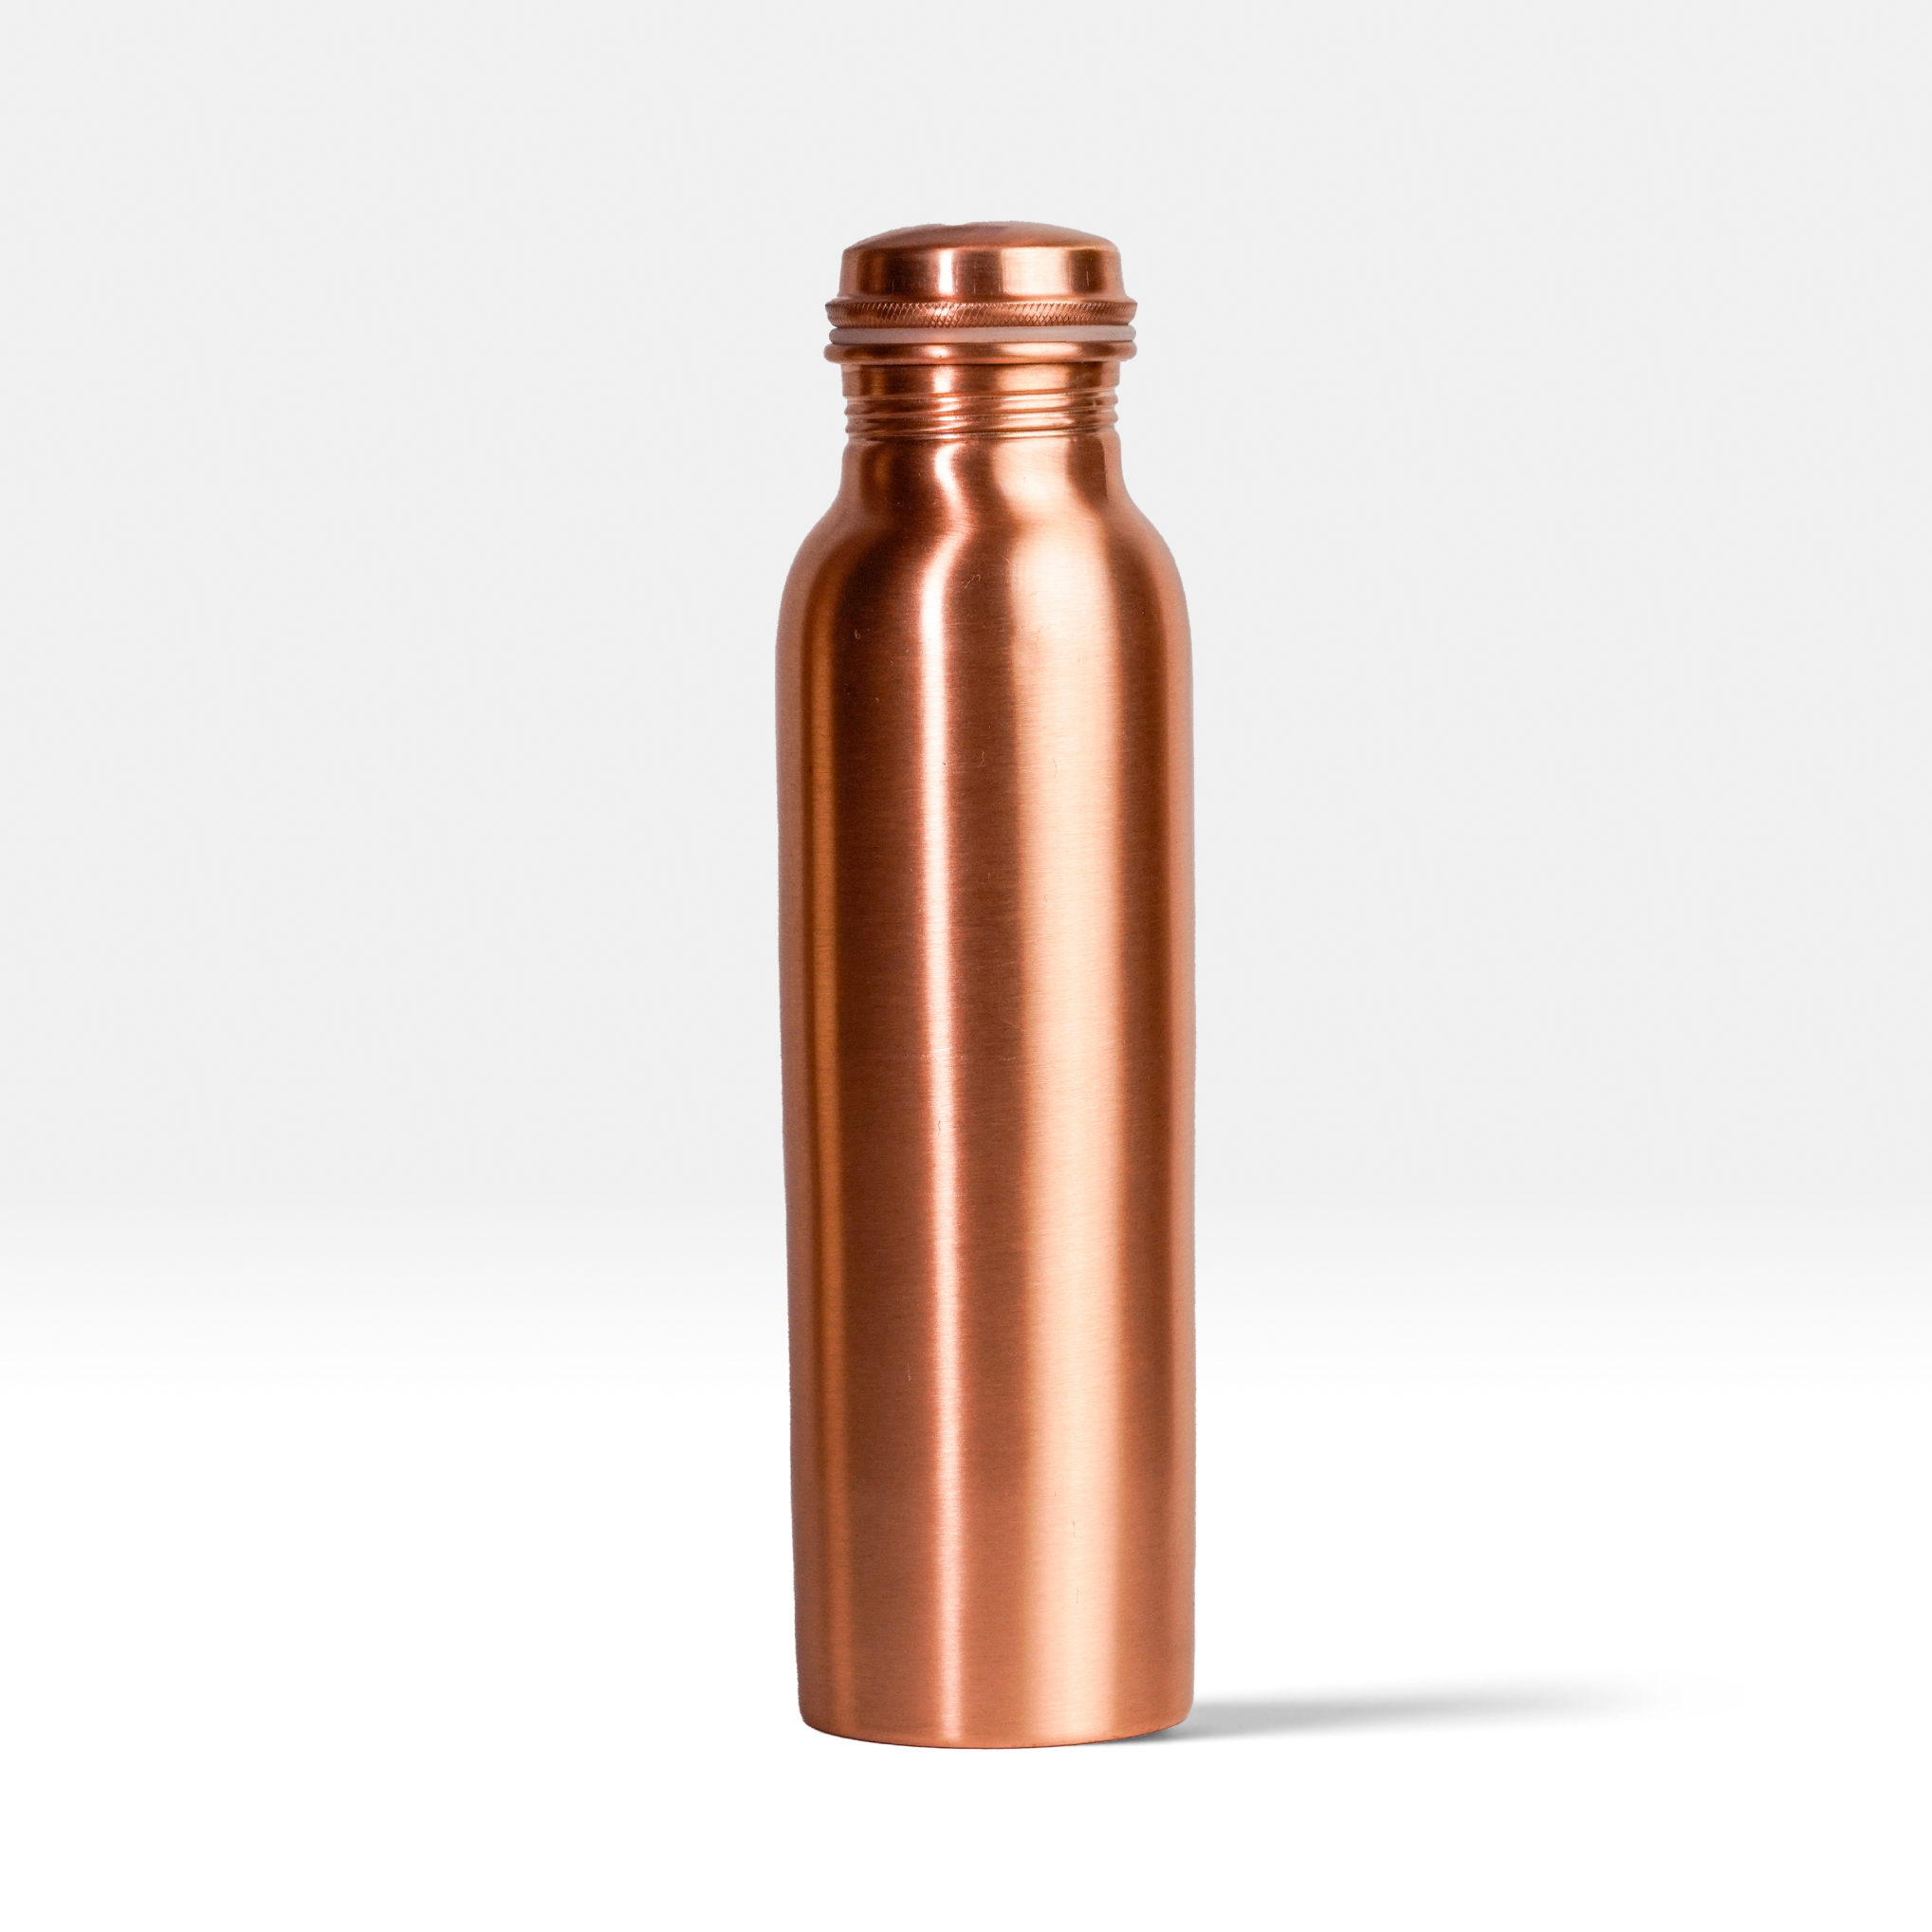 Buy Ecotyl Copper Bottle - 950 ml at Best Price Online